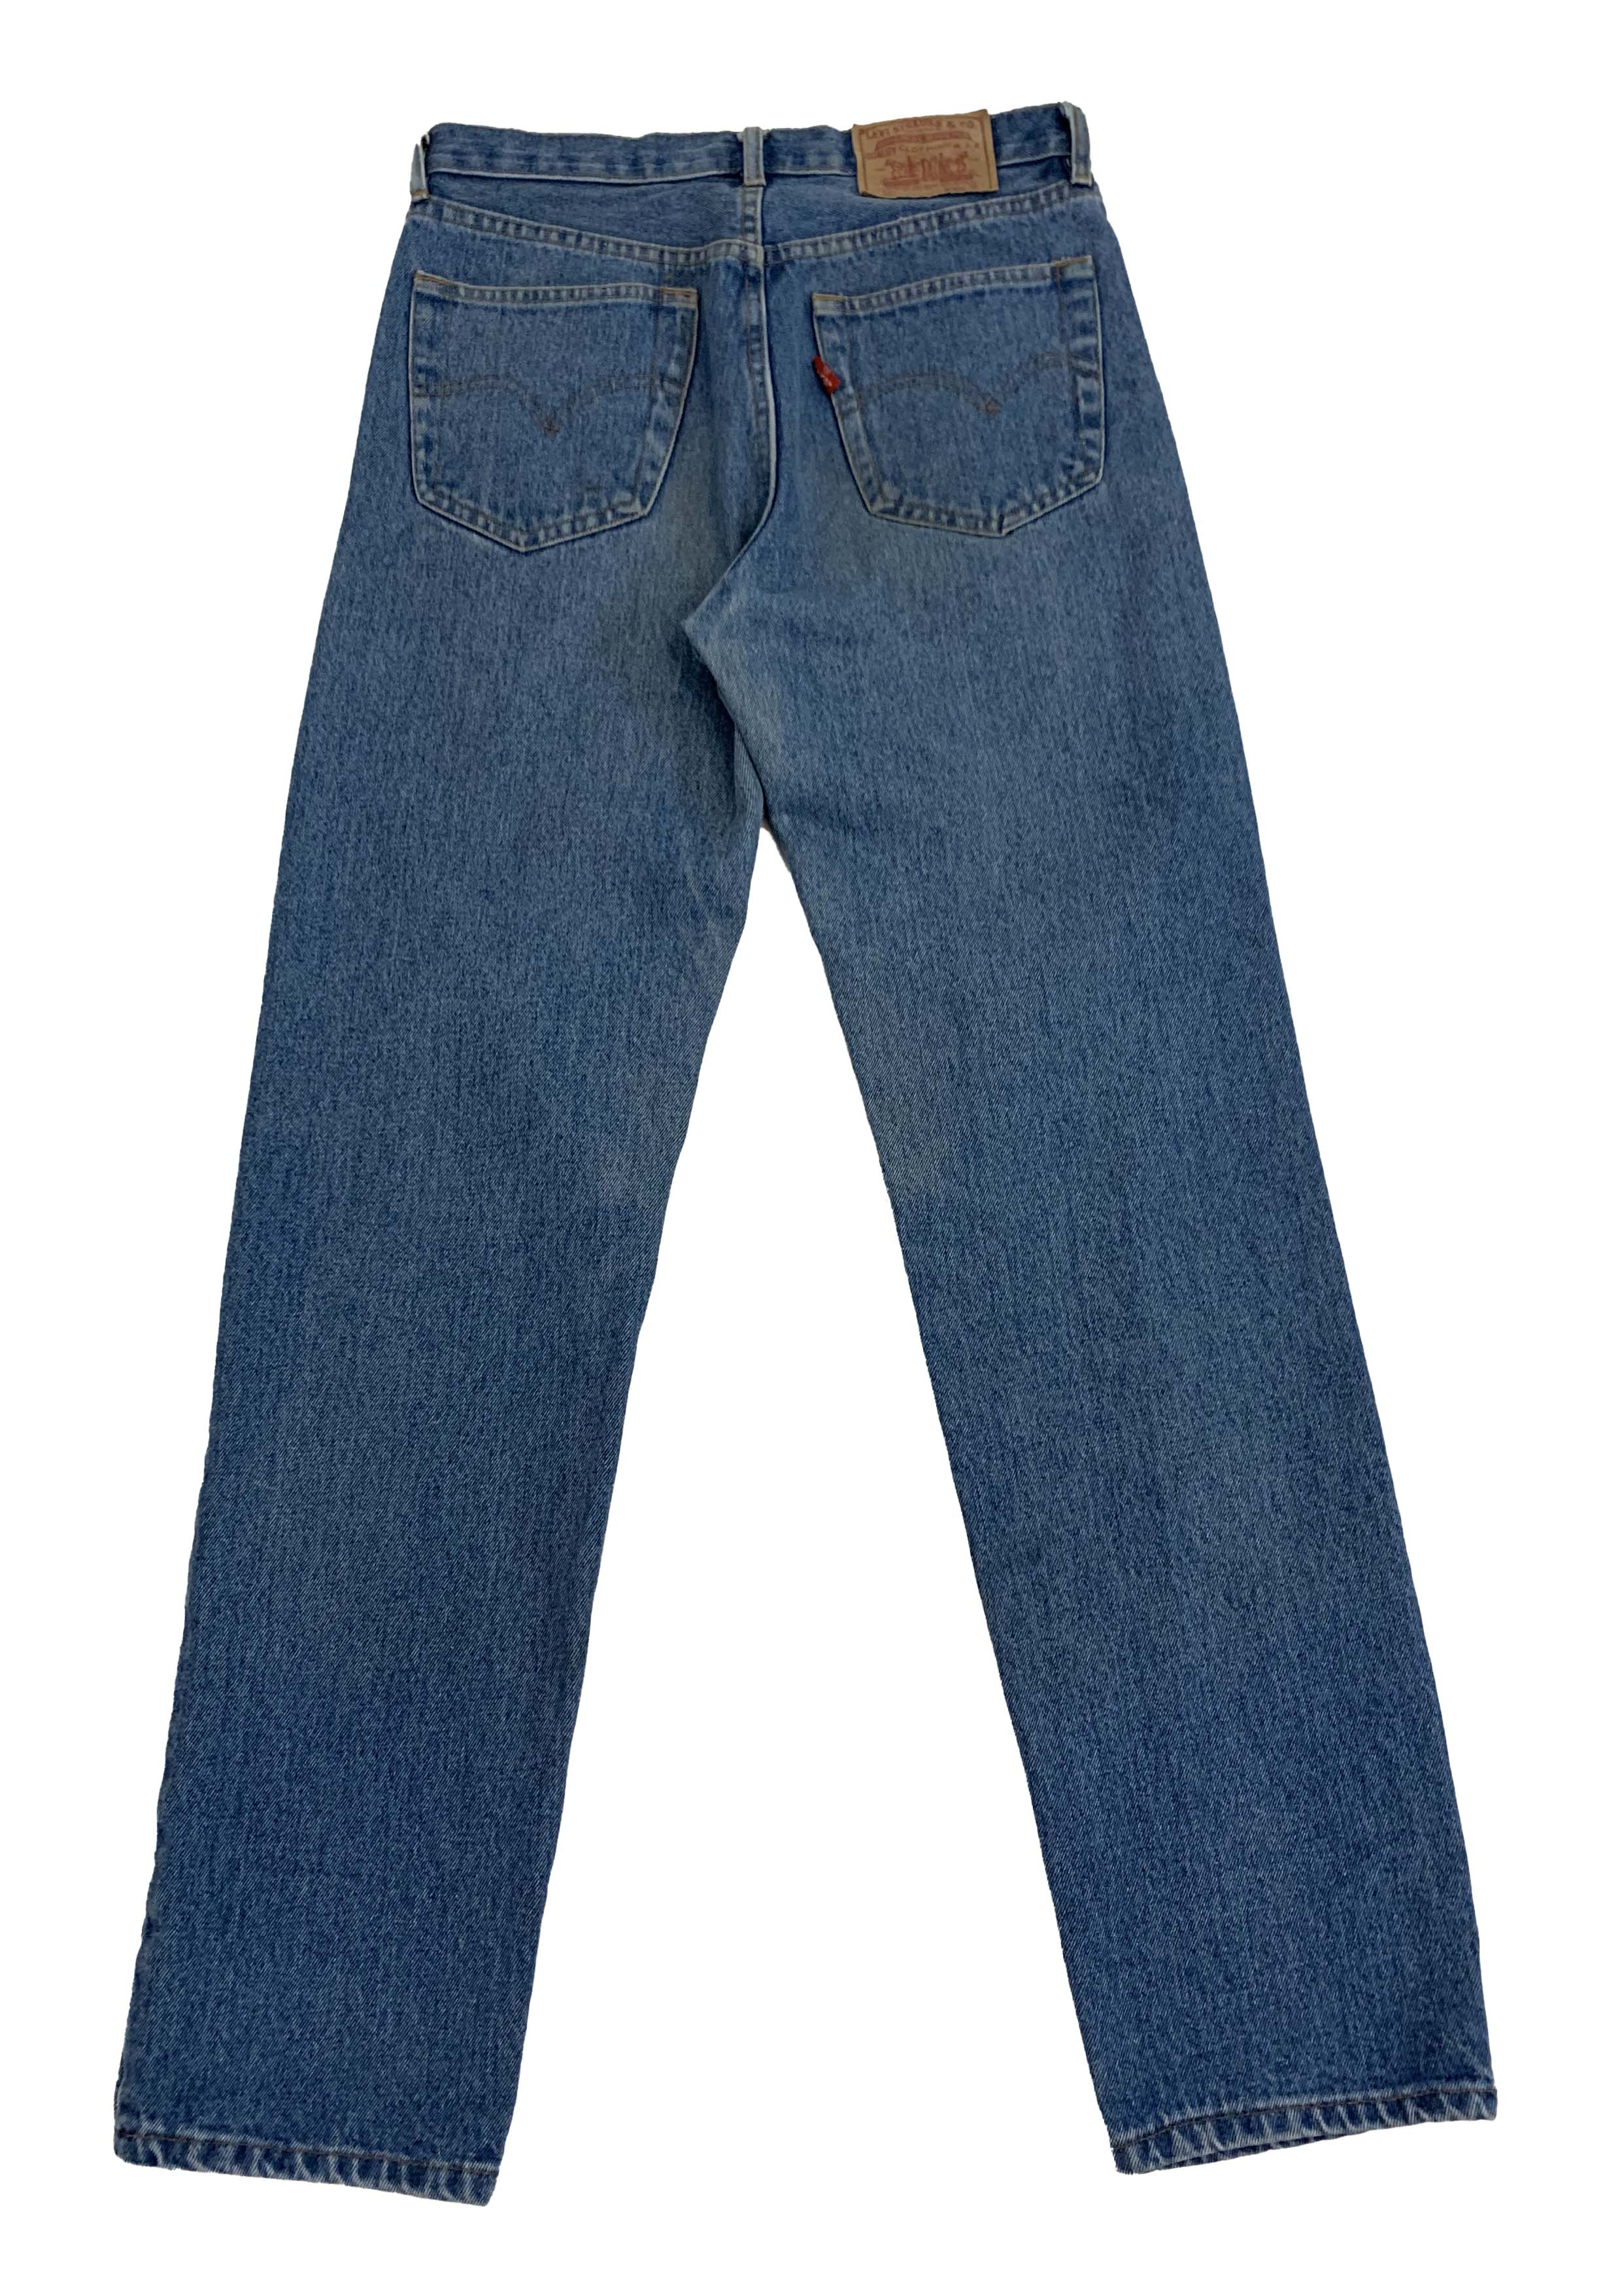 LEVI'S jeans 30w